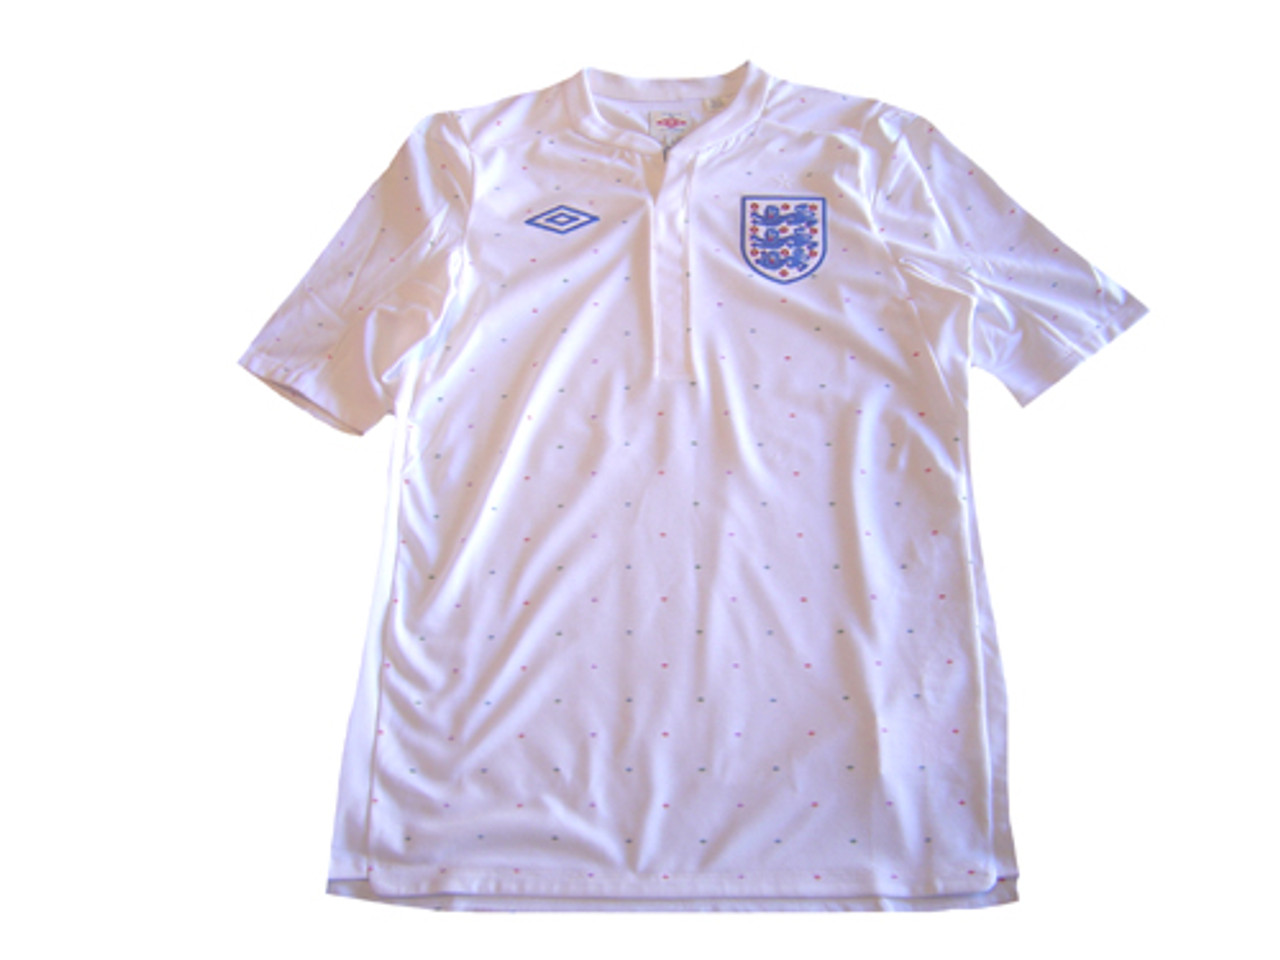 england jersey 2011